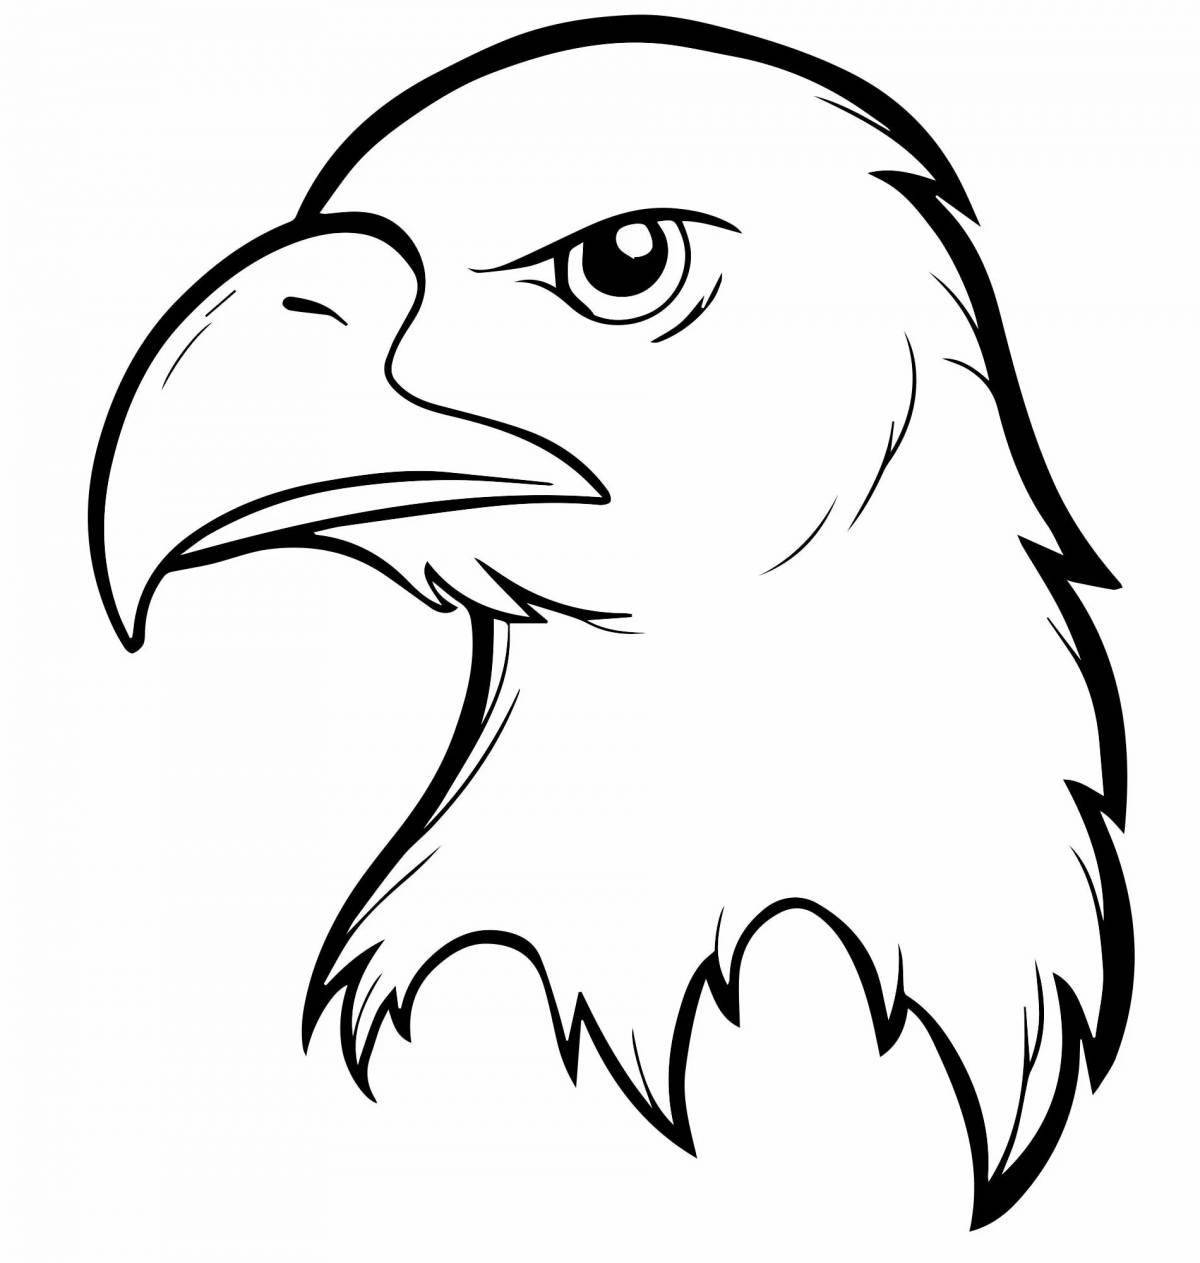 Coloring bright eaglet